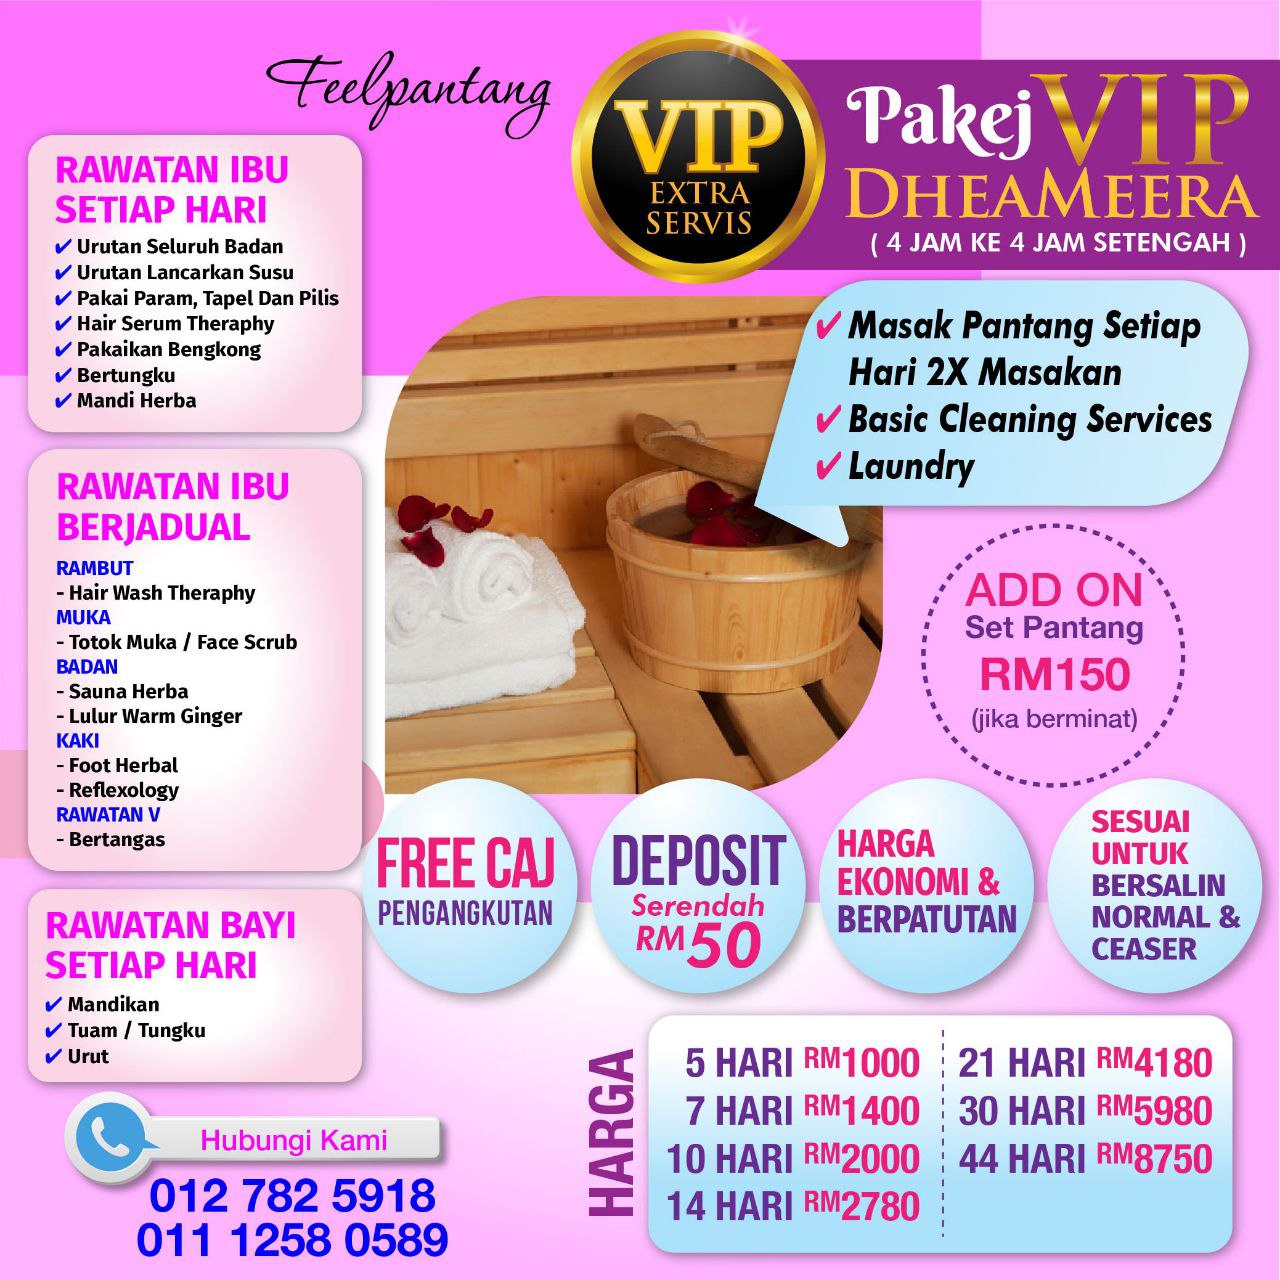 Pakej VIP Dheameera (Pakej Vip Dheameera - Pakej Half day Mommy, Baby, Laundry, Masak Dan Basic Cleaning Service)